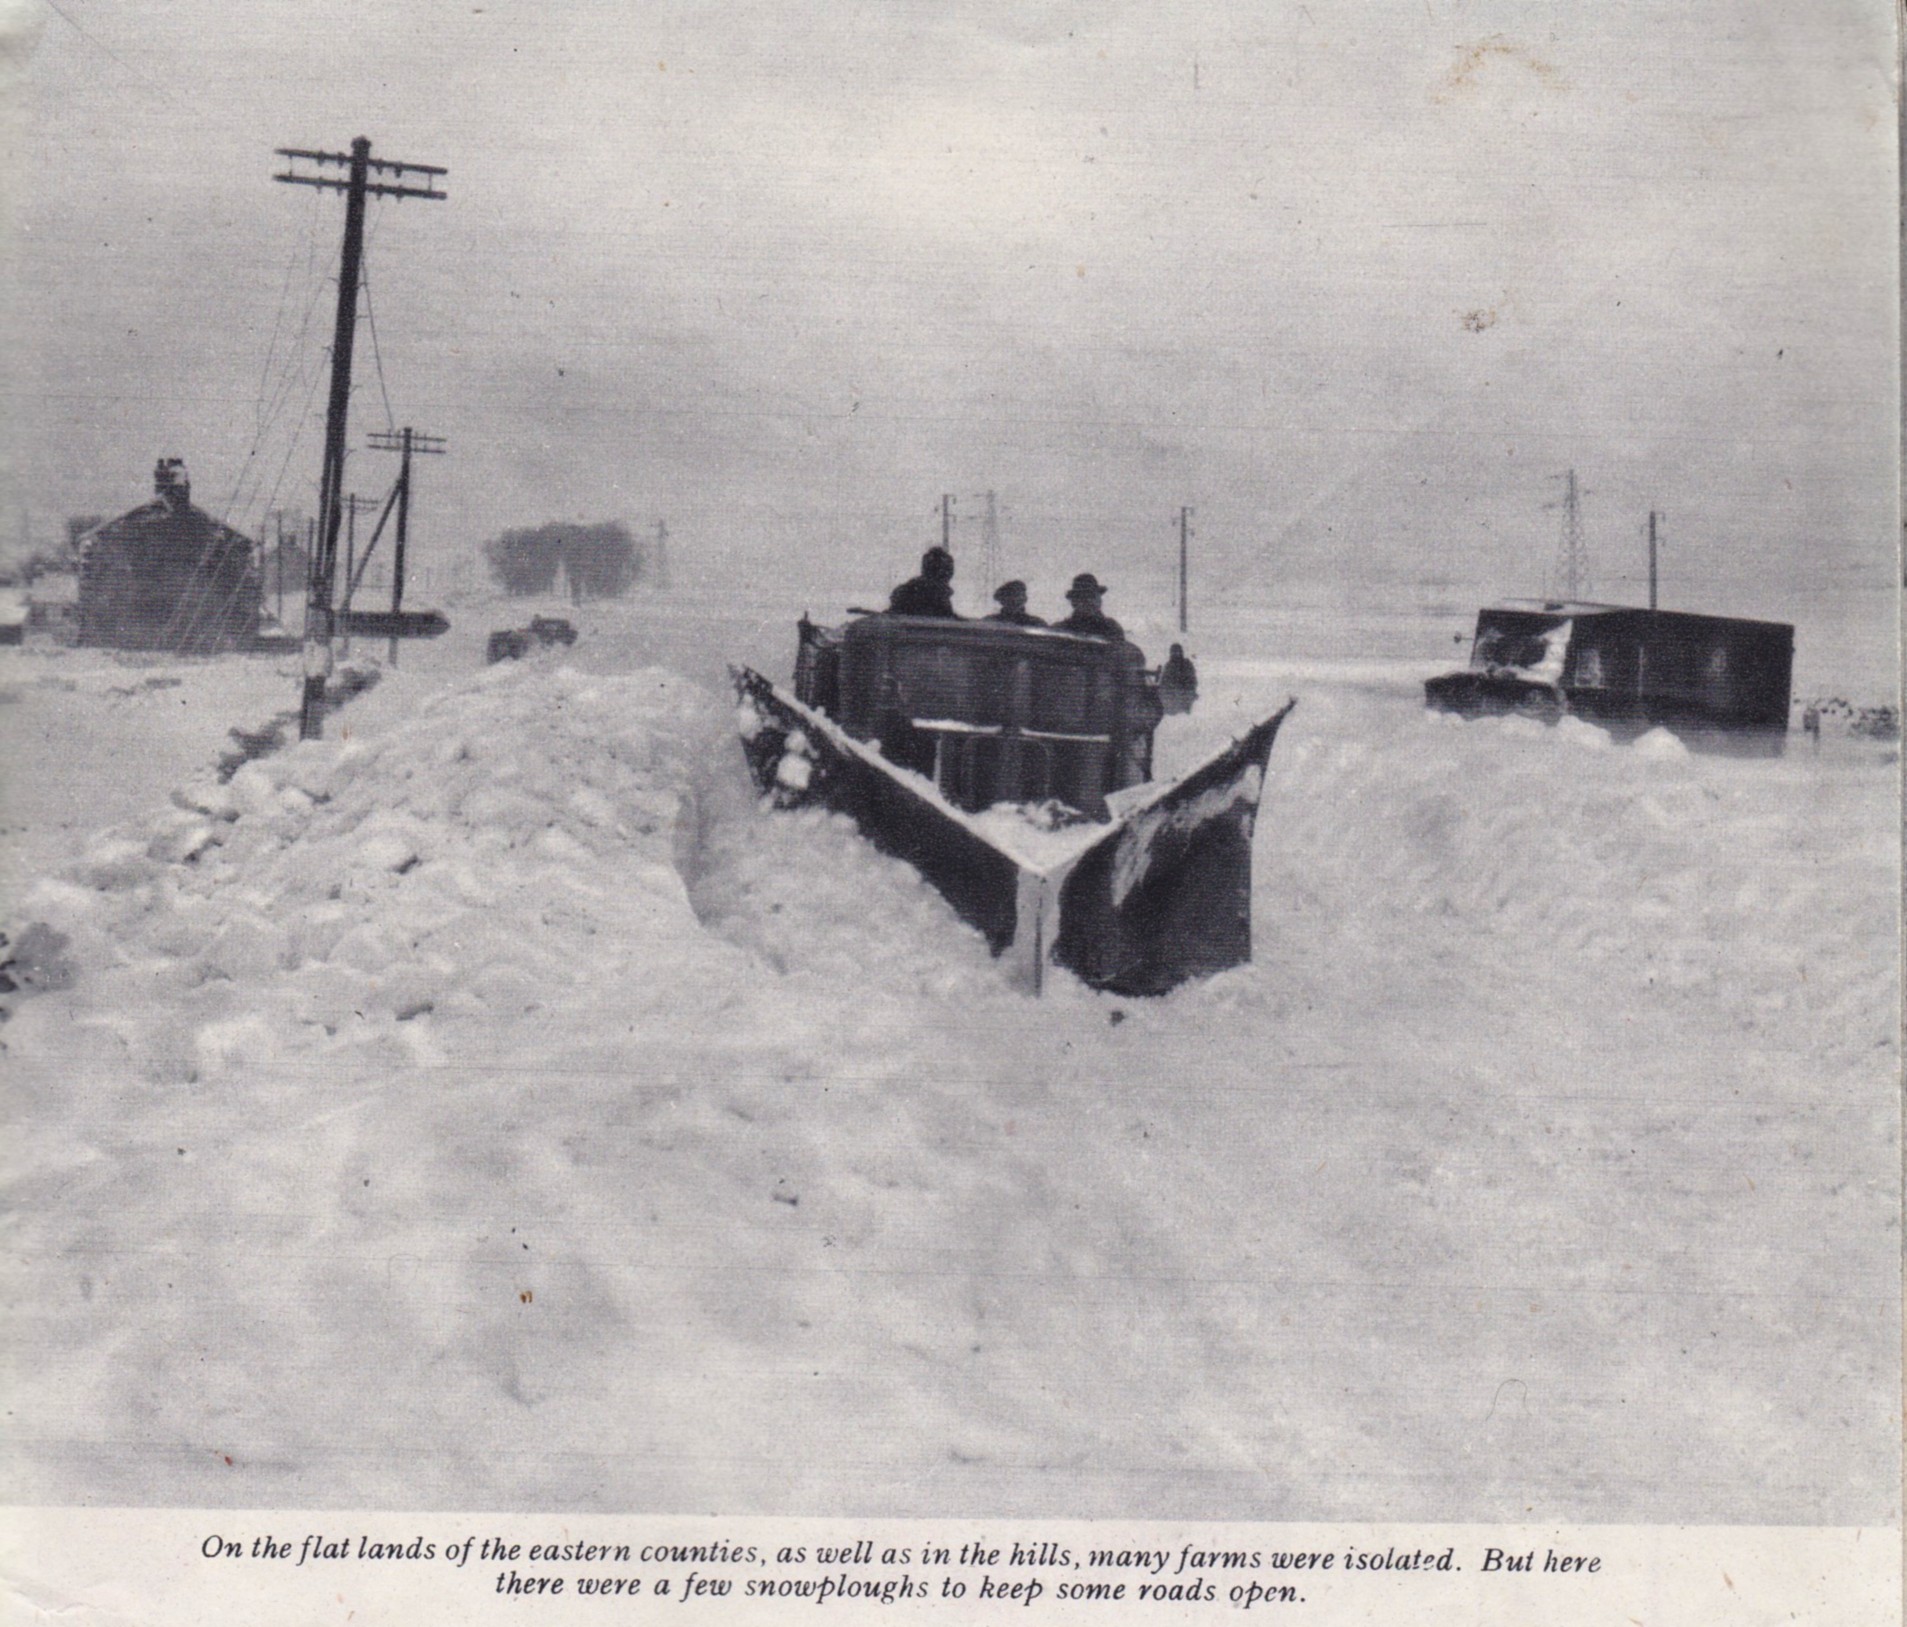 In 1947 the snow depths could be measured in meters not millimeters